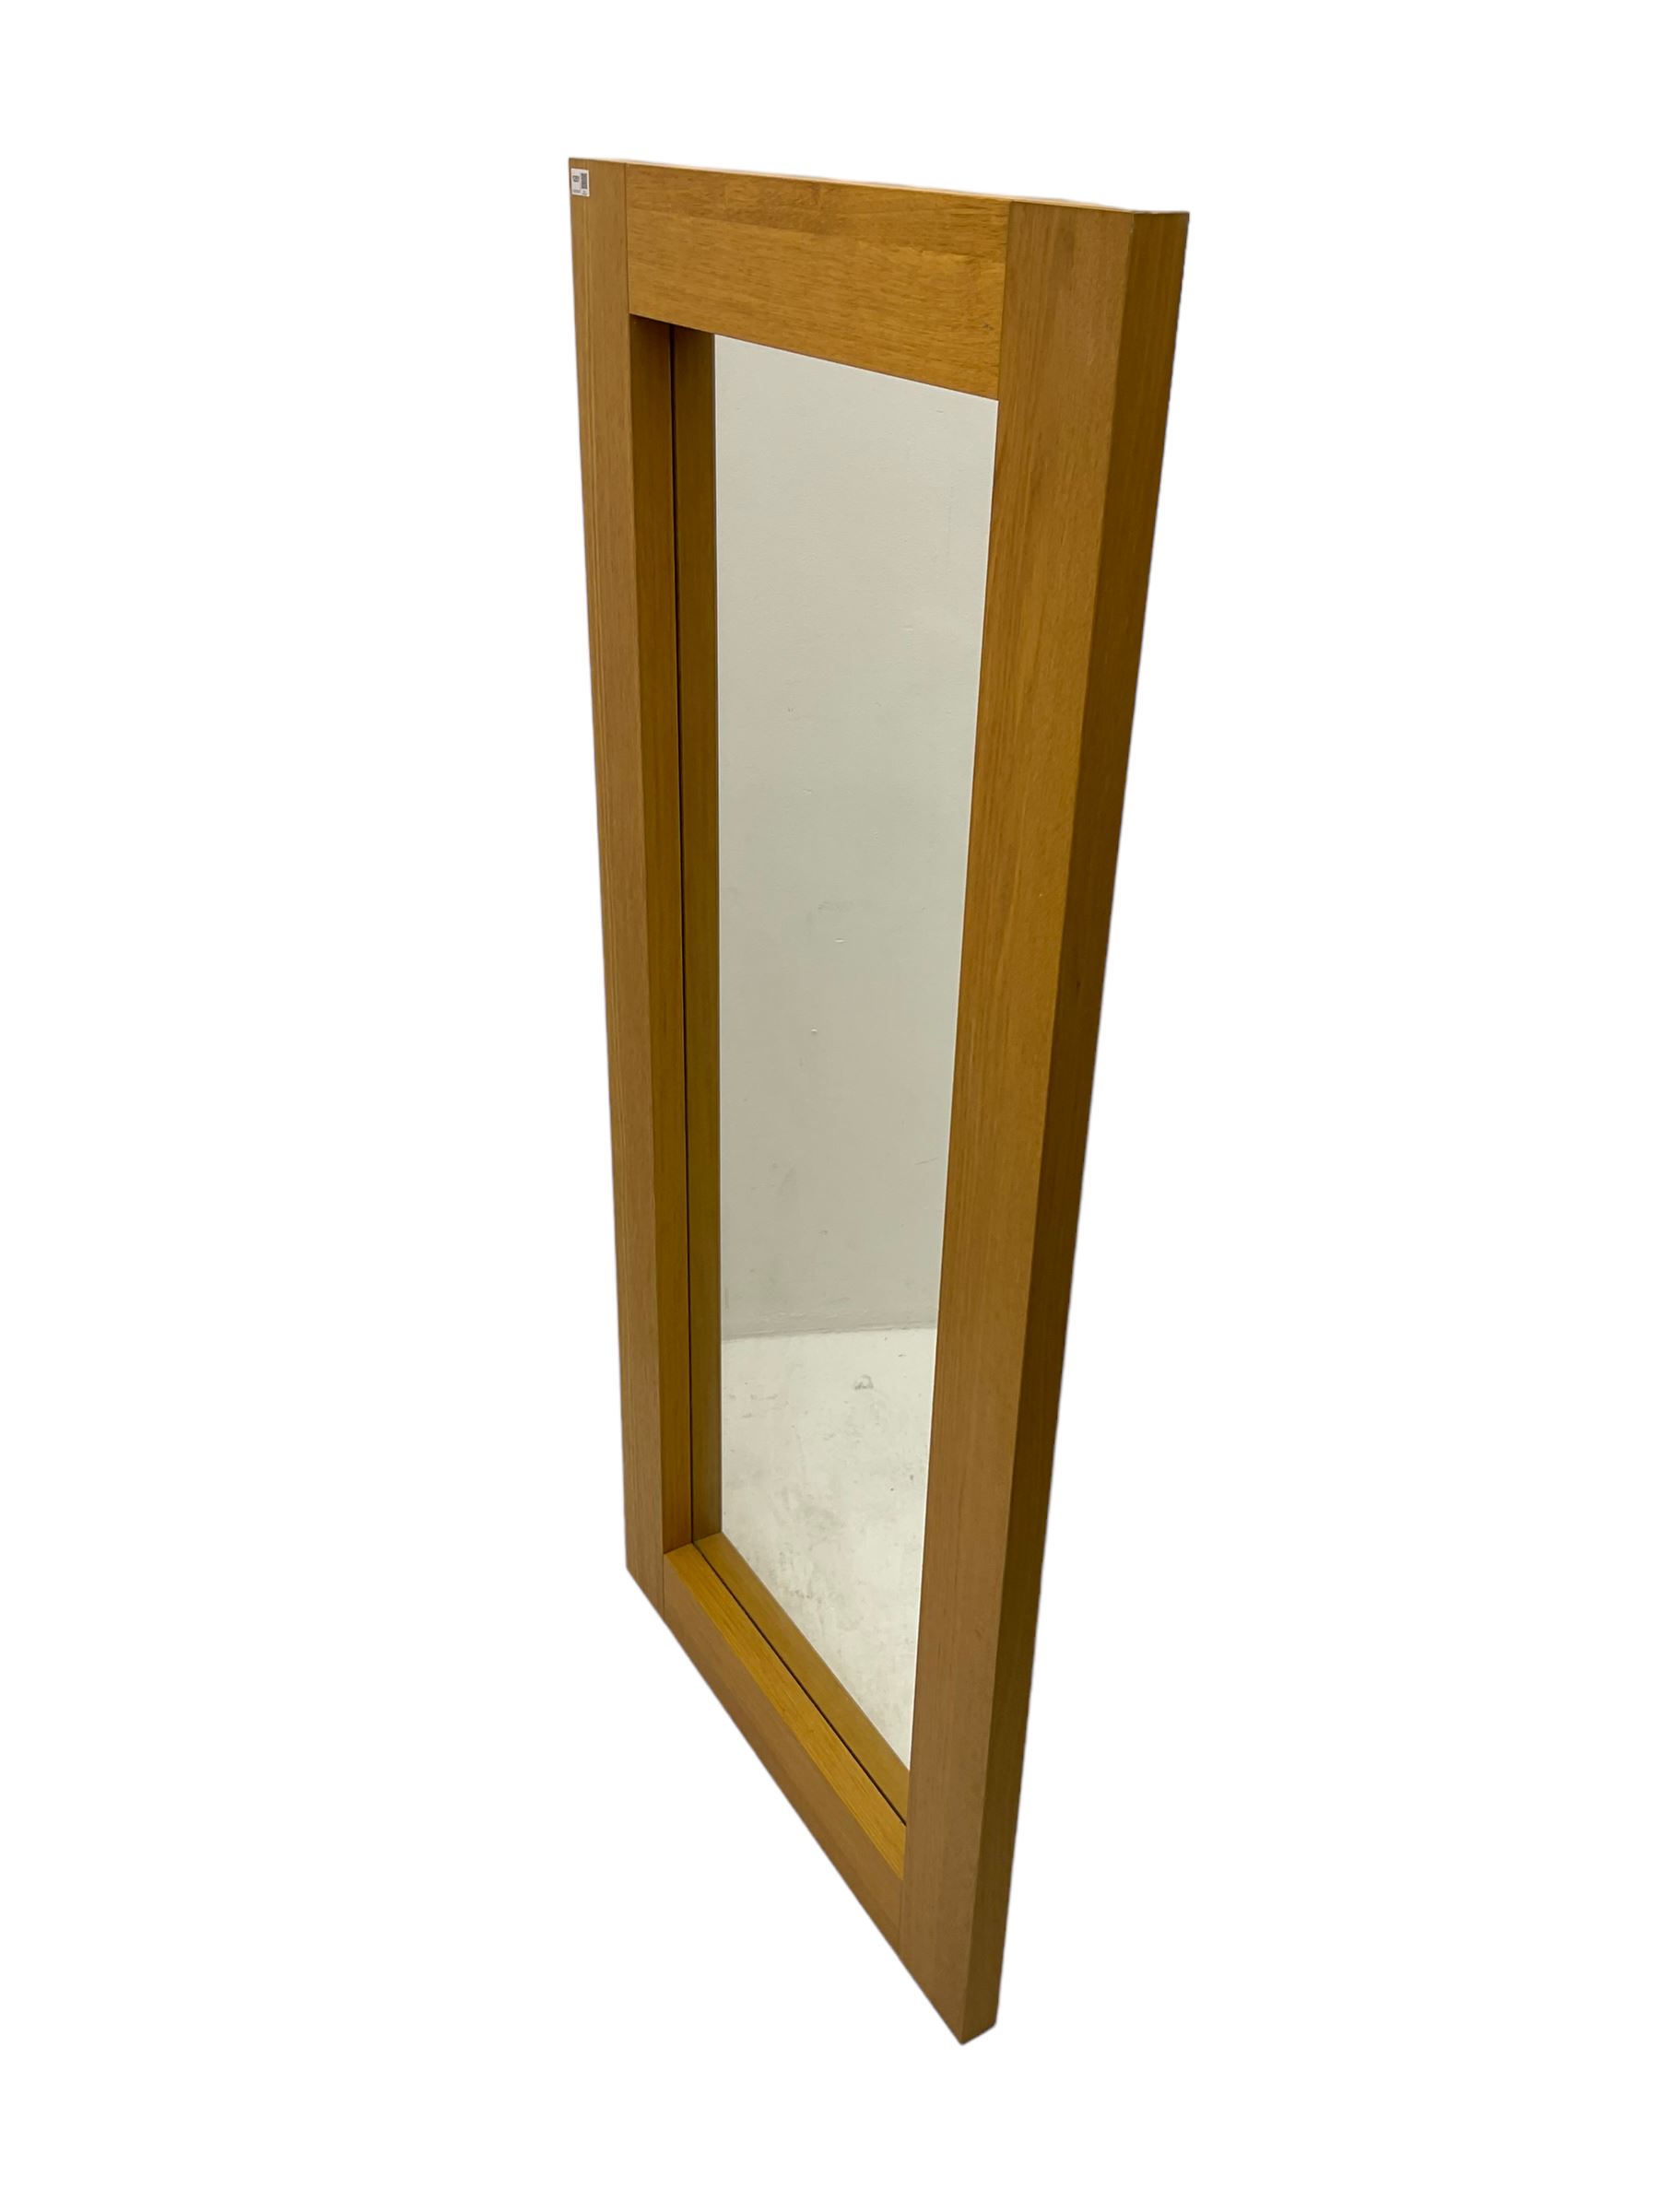 Contemporary oak framed mirror - Image 2 of 10